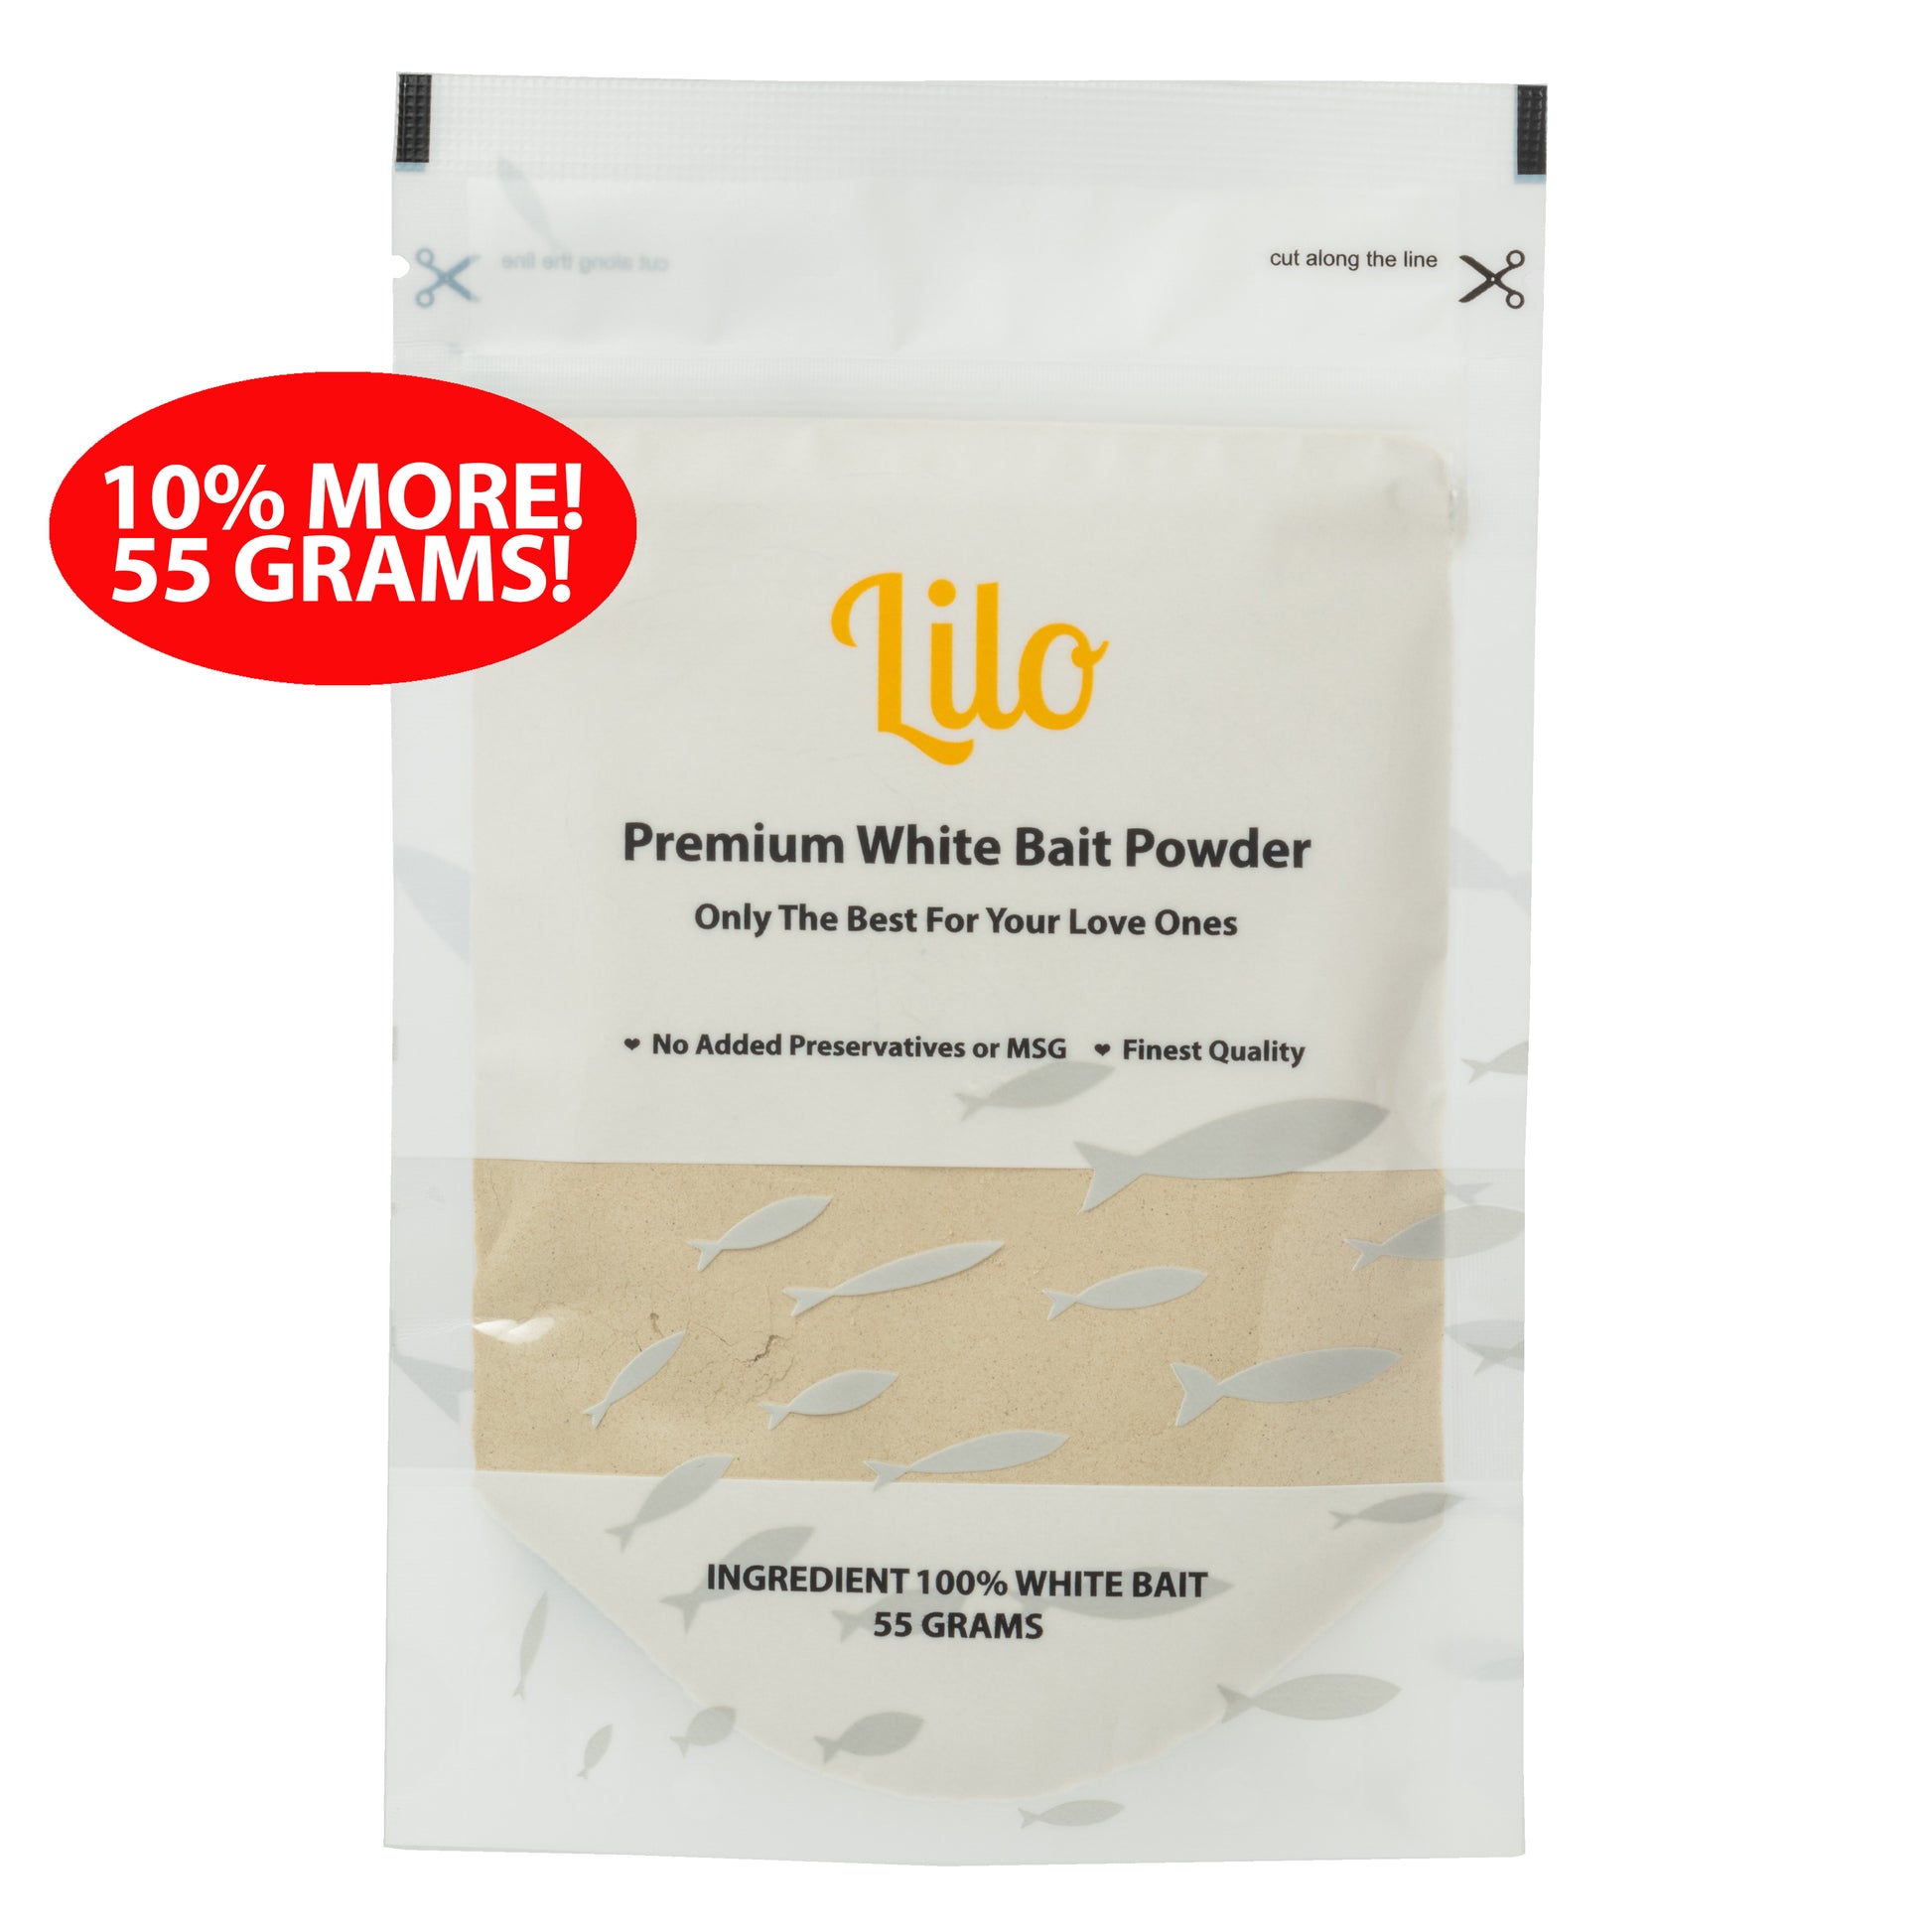 Lilo Premium White Bait Powder Resealable Refill Pack 55grams - Lilo Premium Ikan Bilis Powder